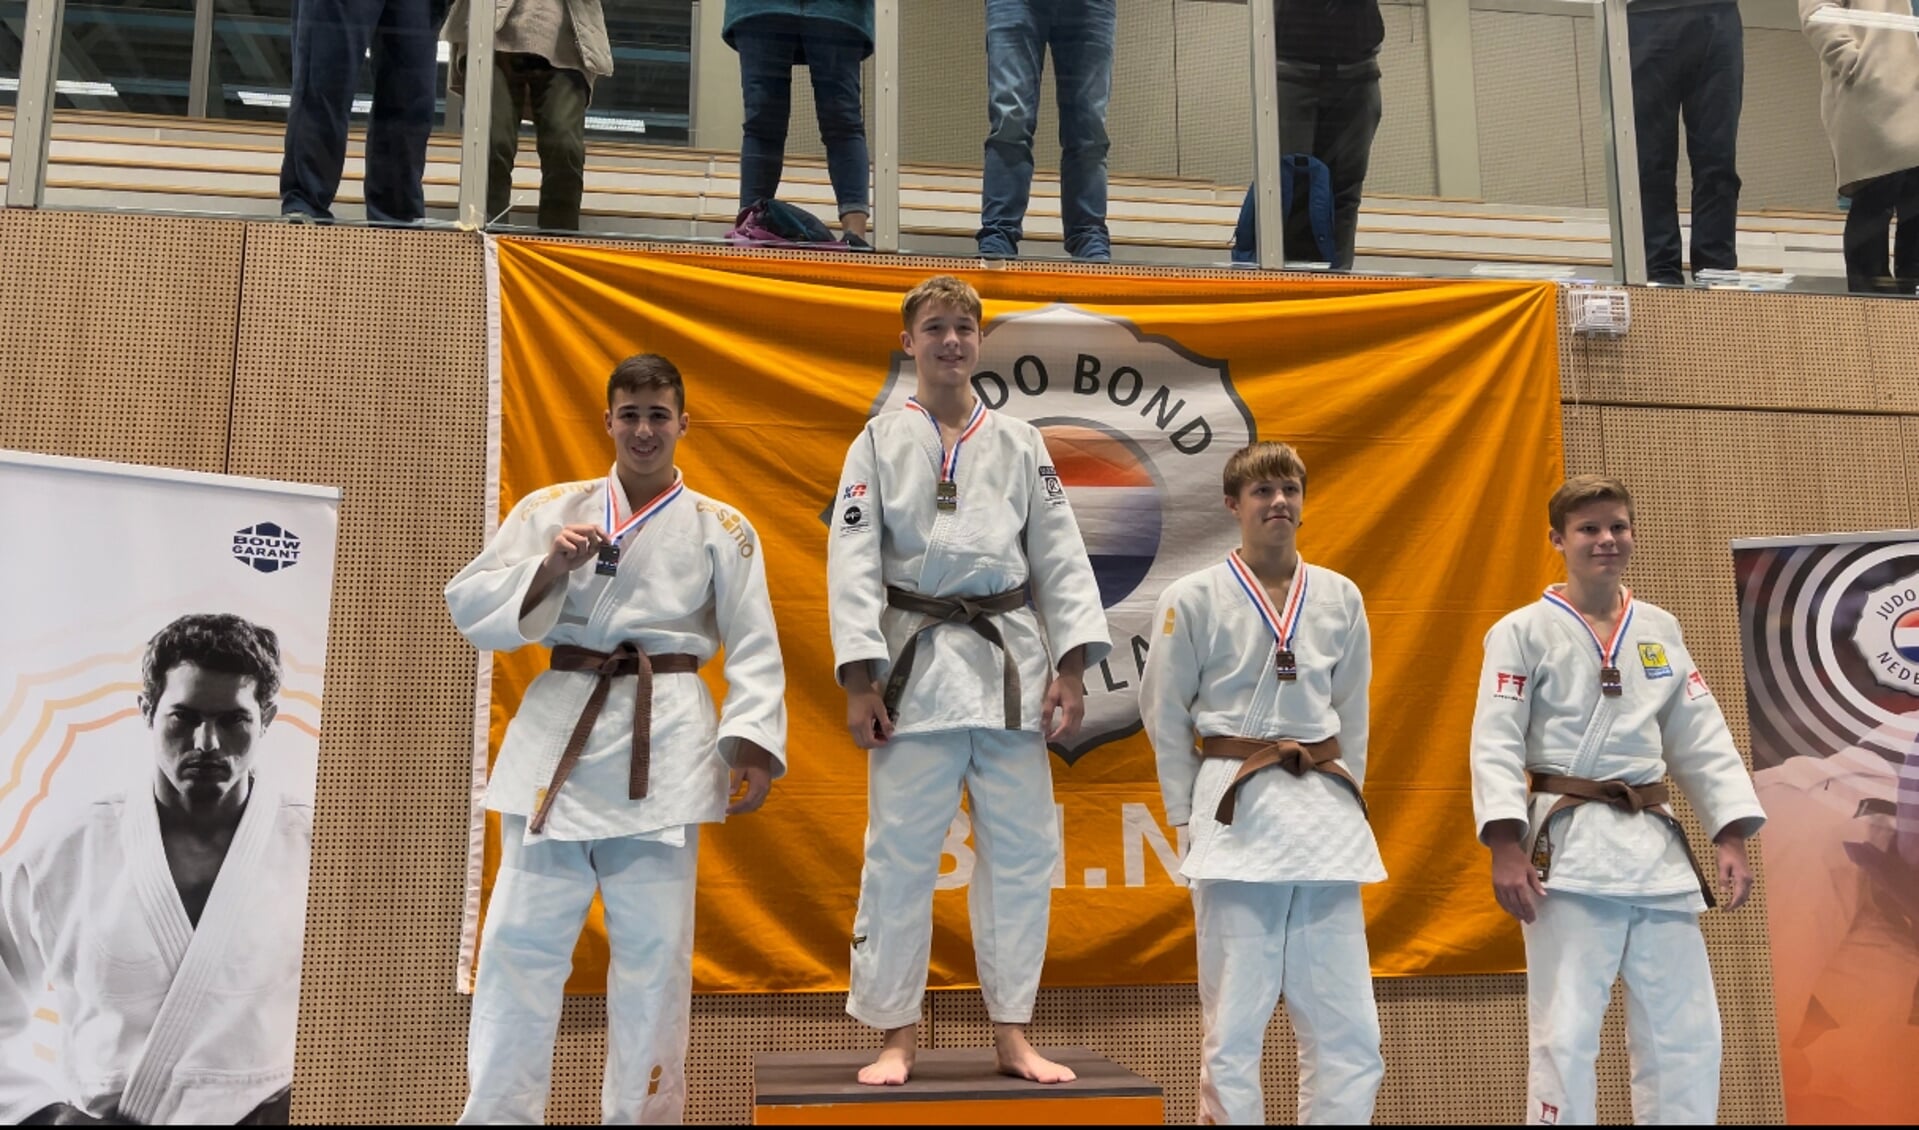 Judoka Inno Loeber, kampioen van Nederland